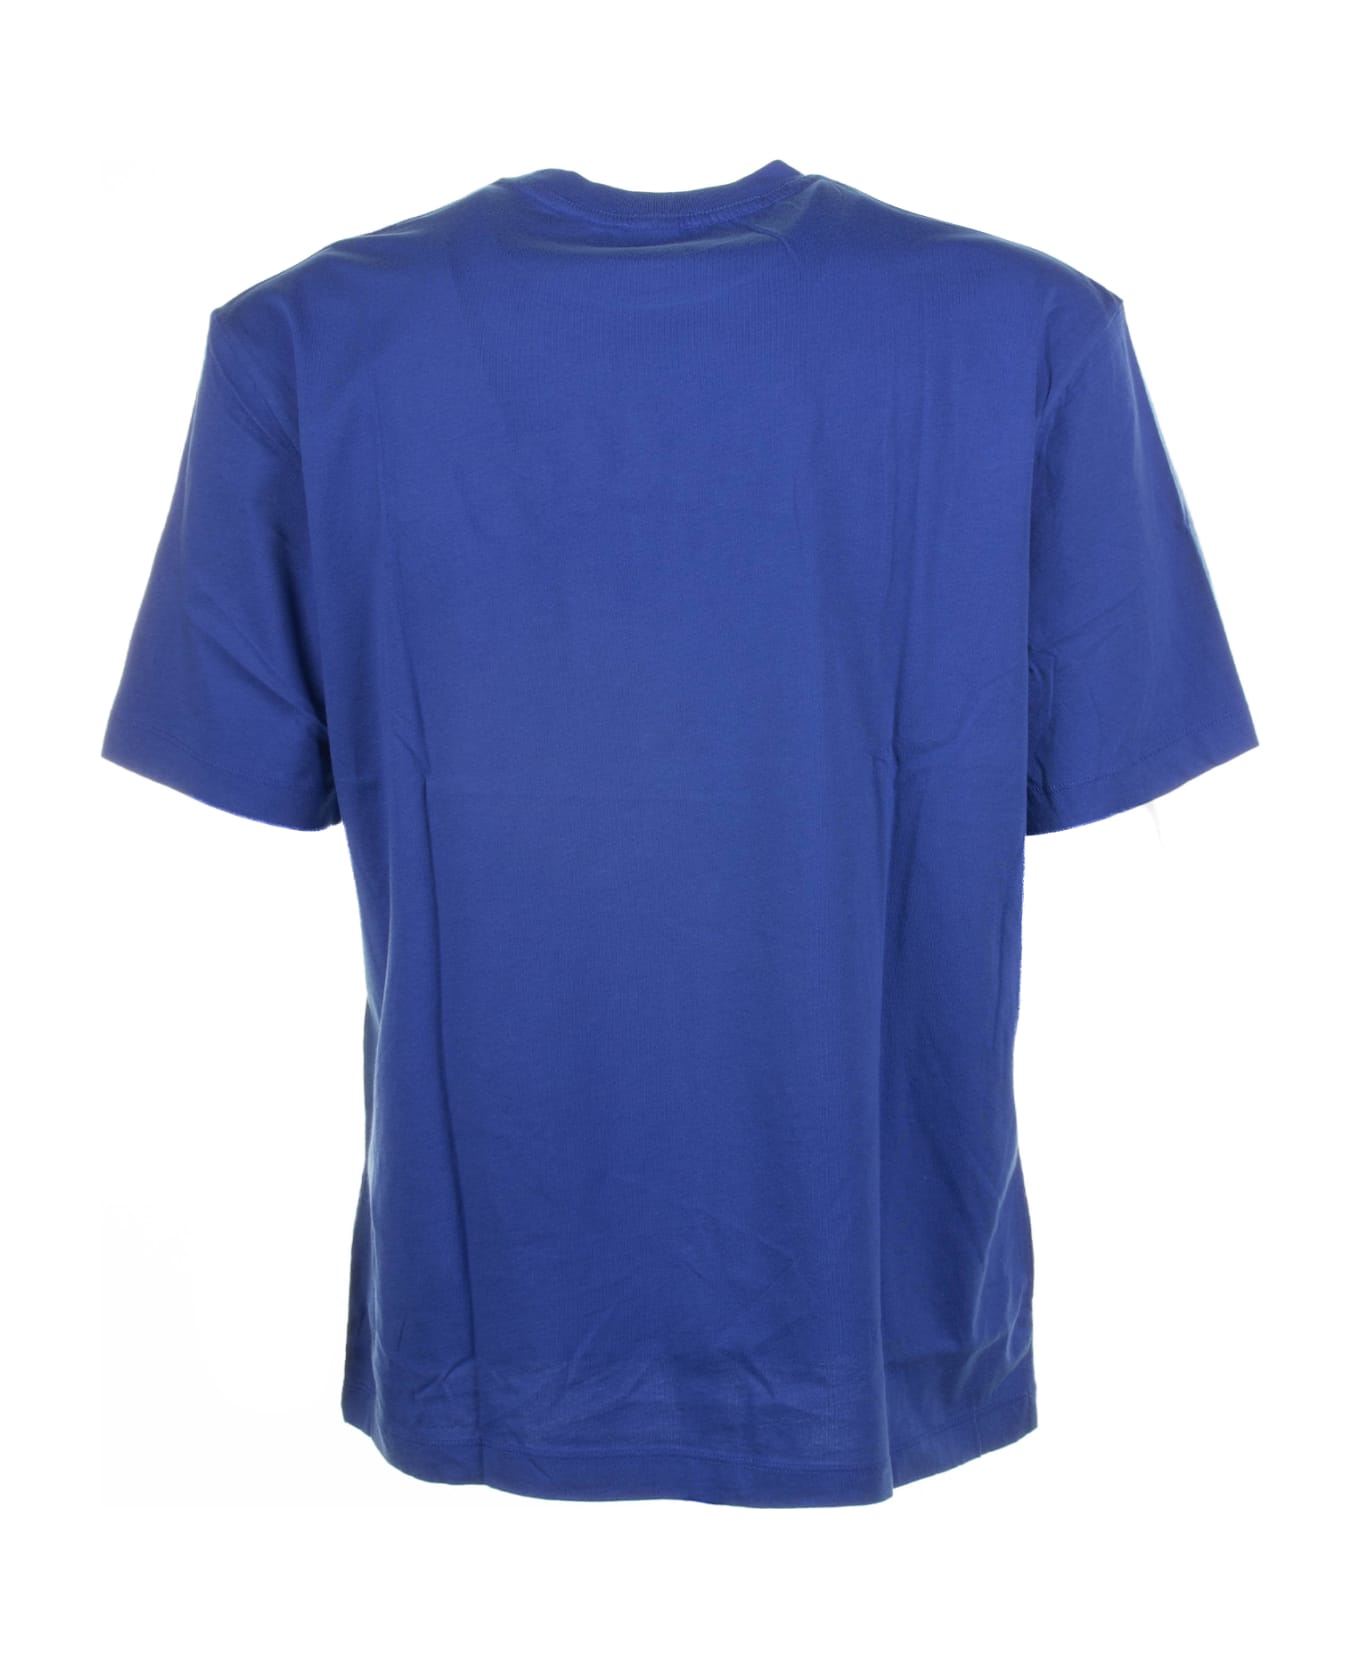 Blauer T-Shirt - MOLTO BLU